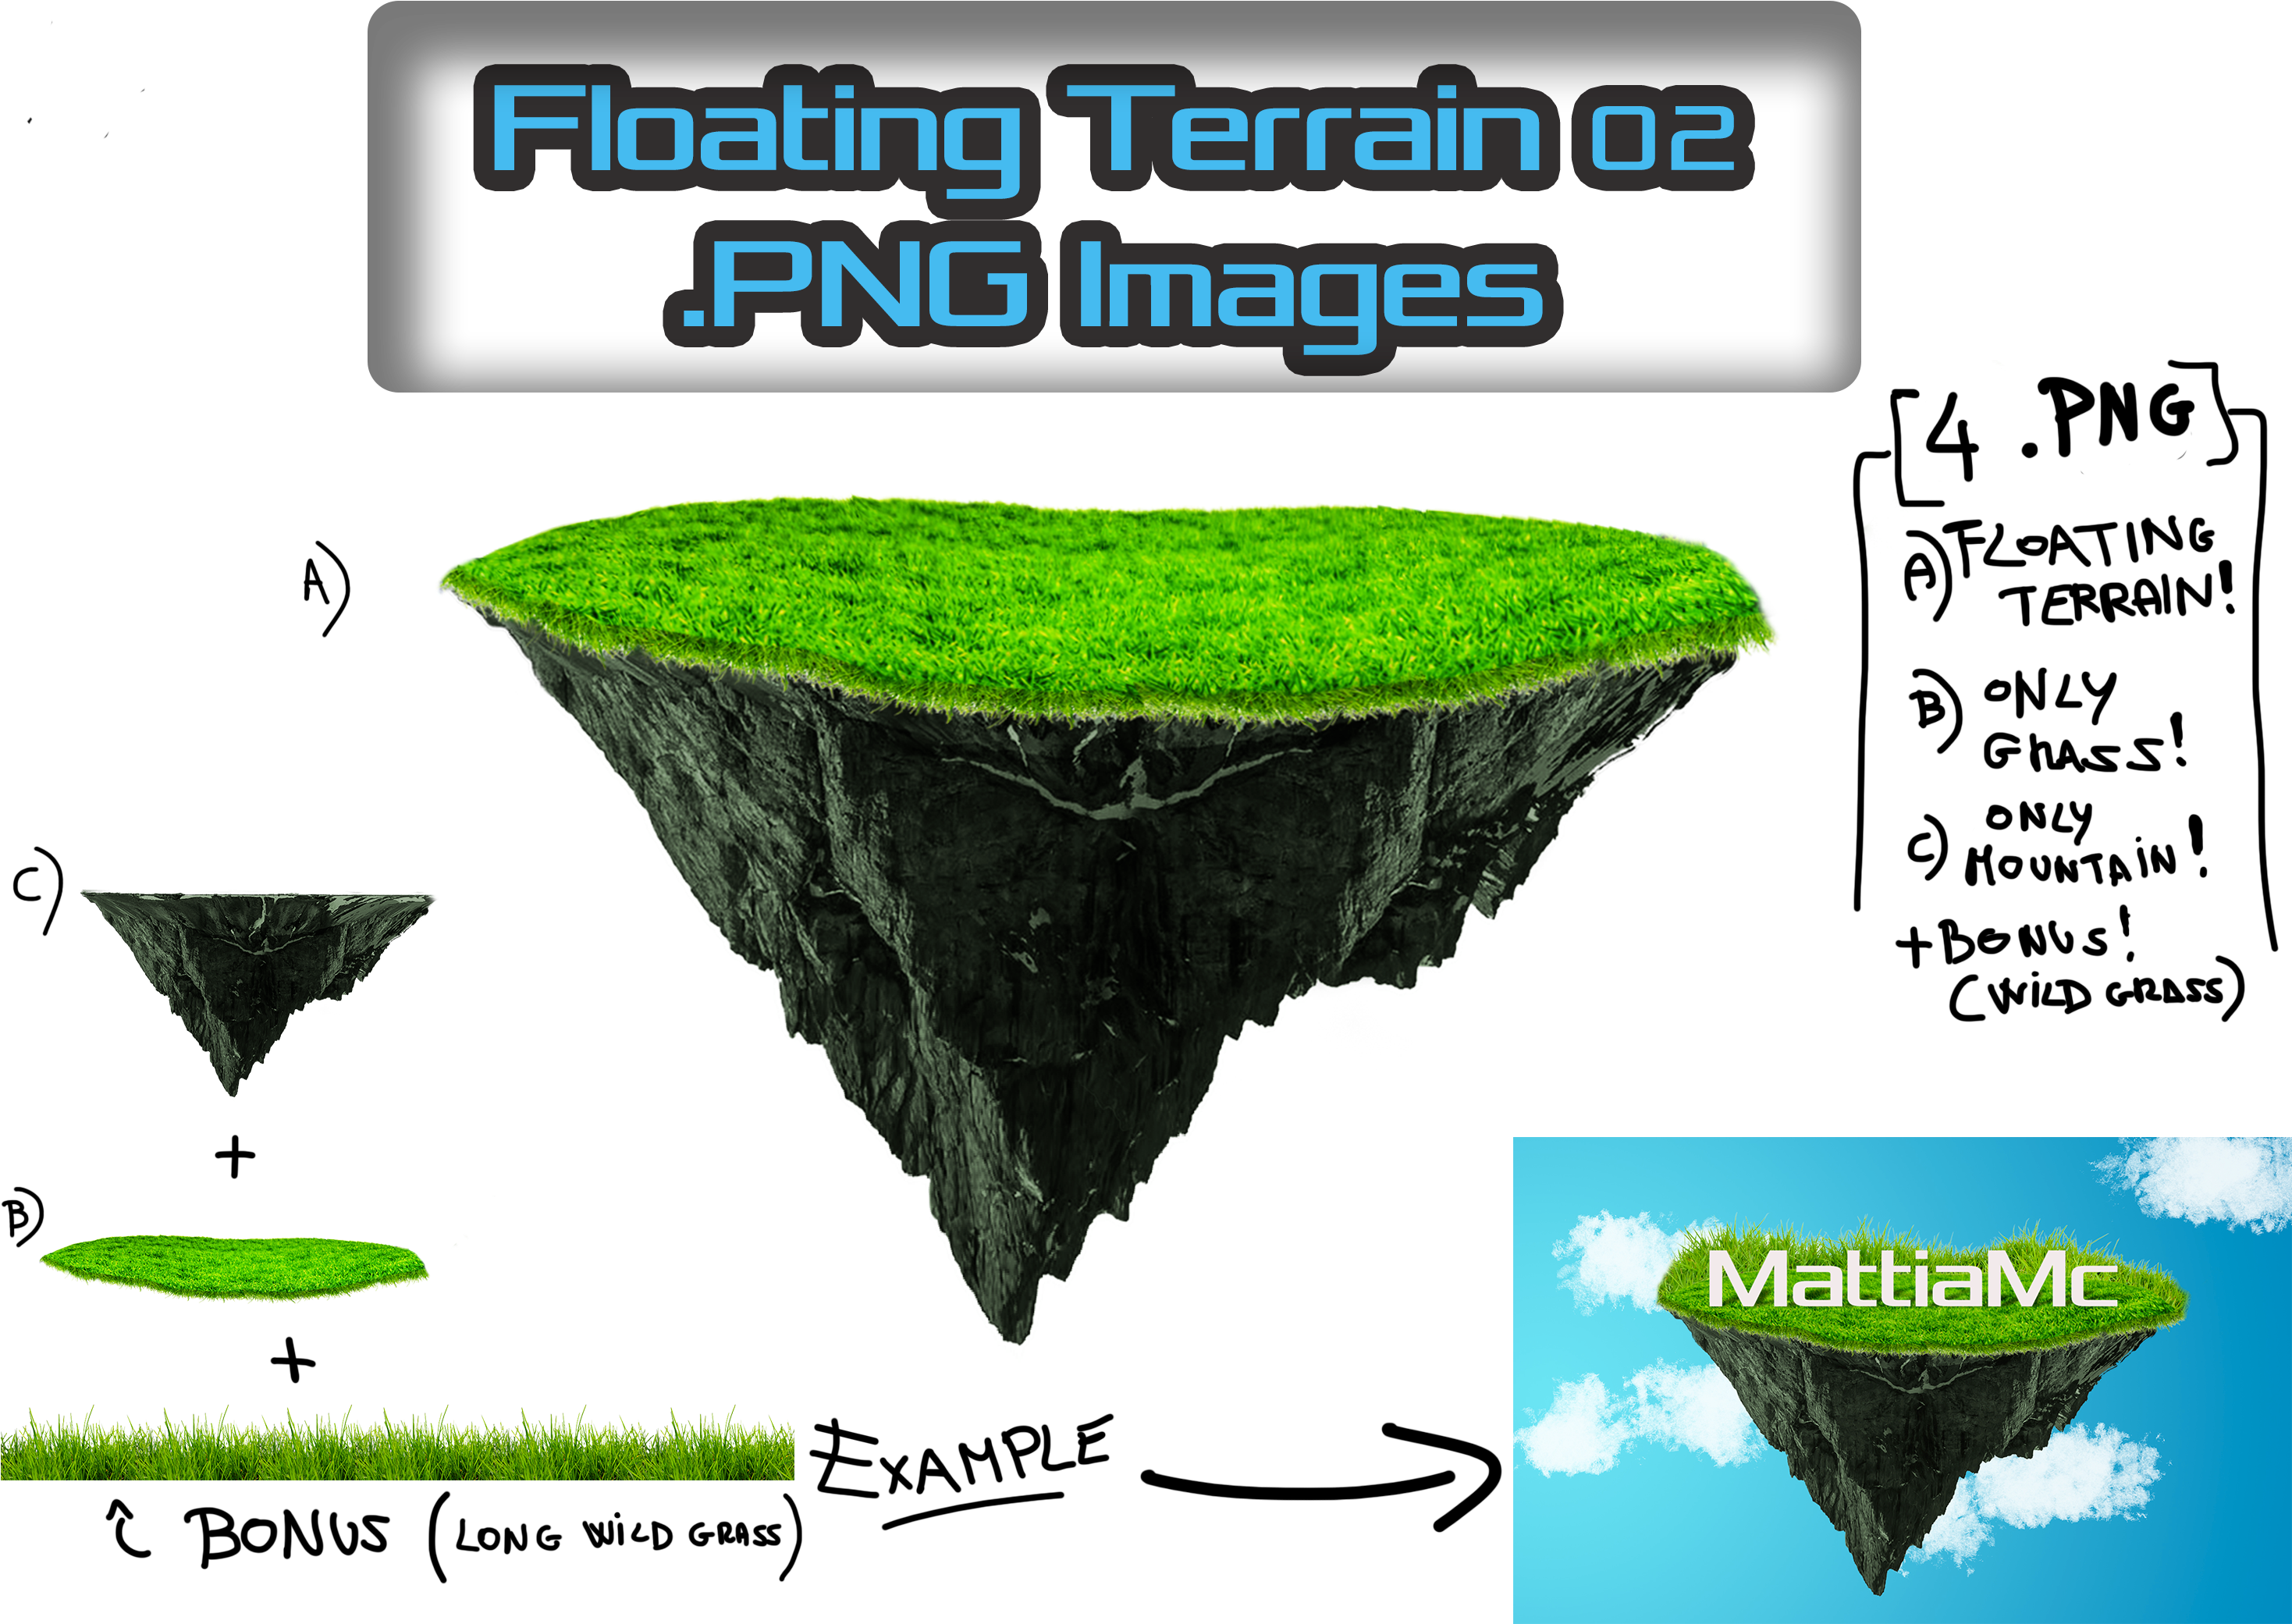 Floating Terrain Mountain 02 Png Bonus By Mattiamc - Floating Terrain Mountain Png (2967x2138)